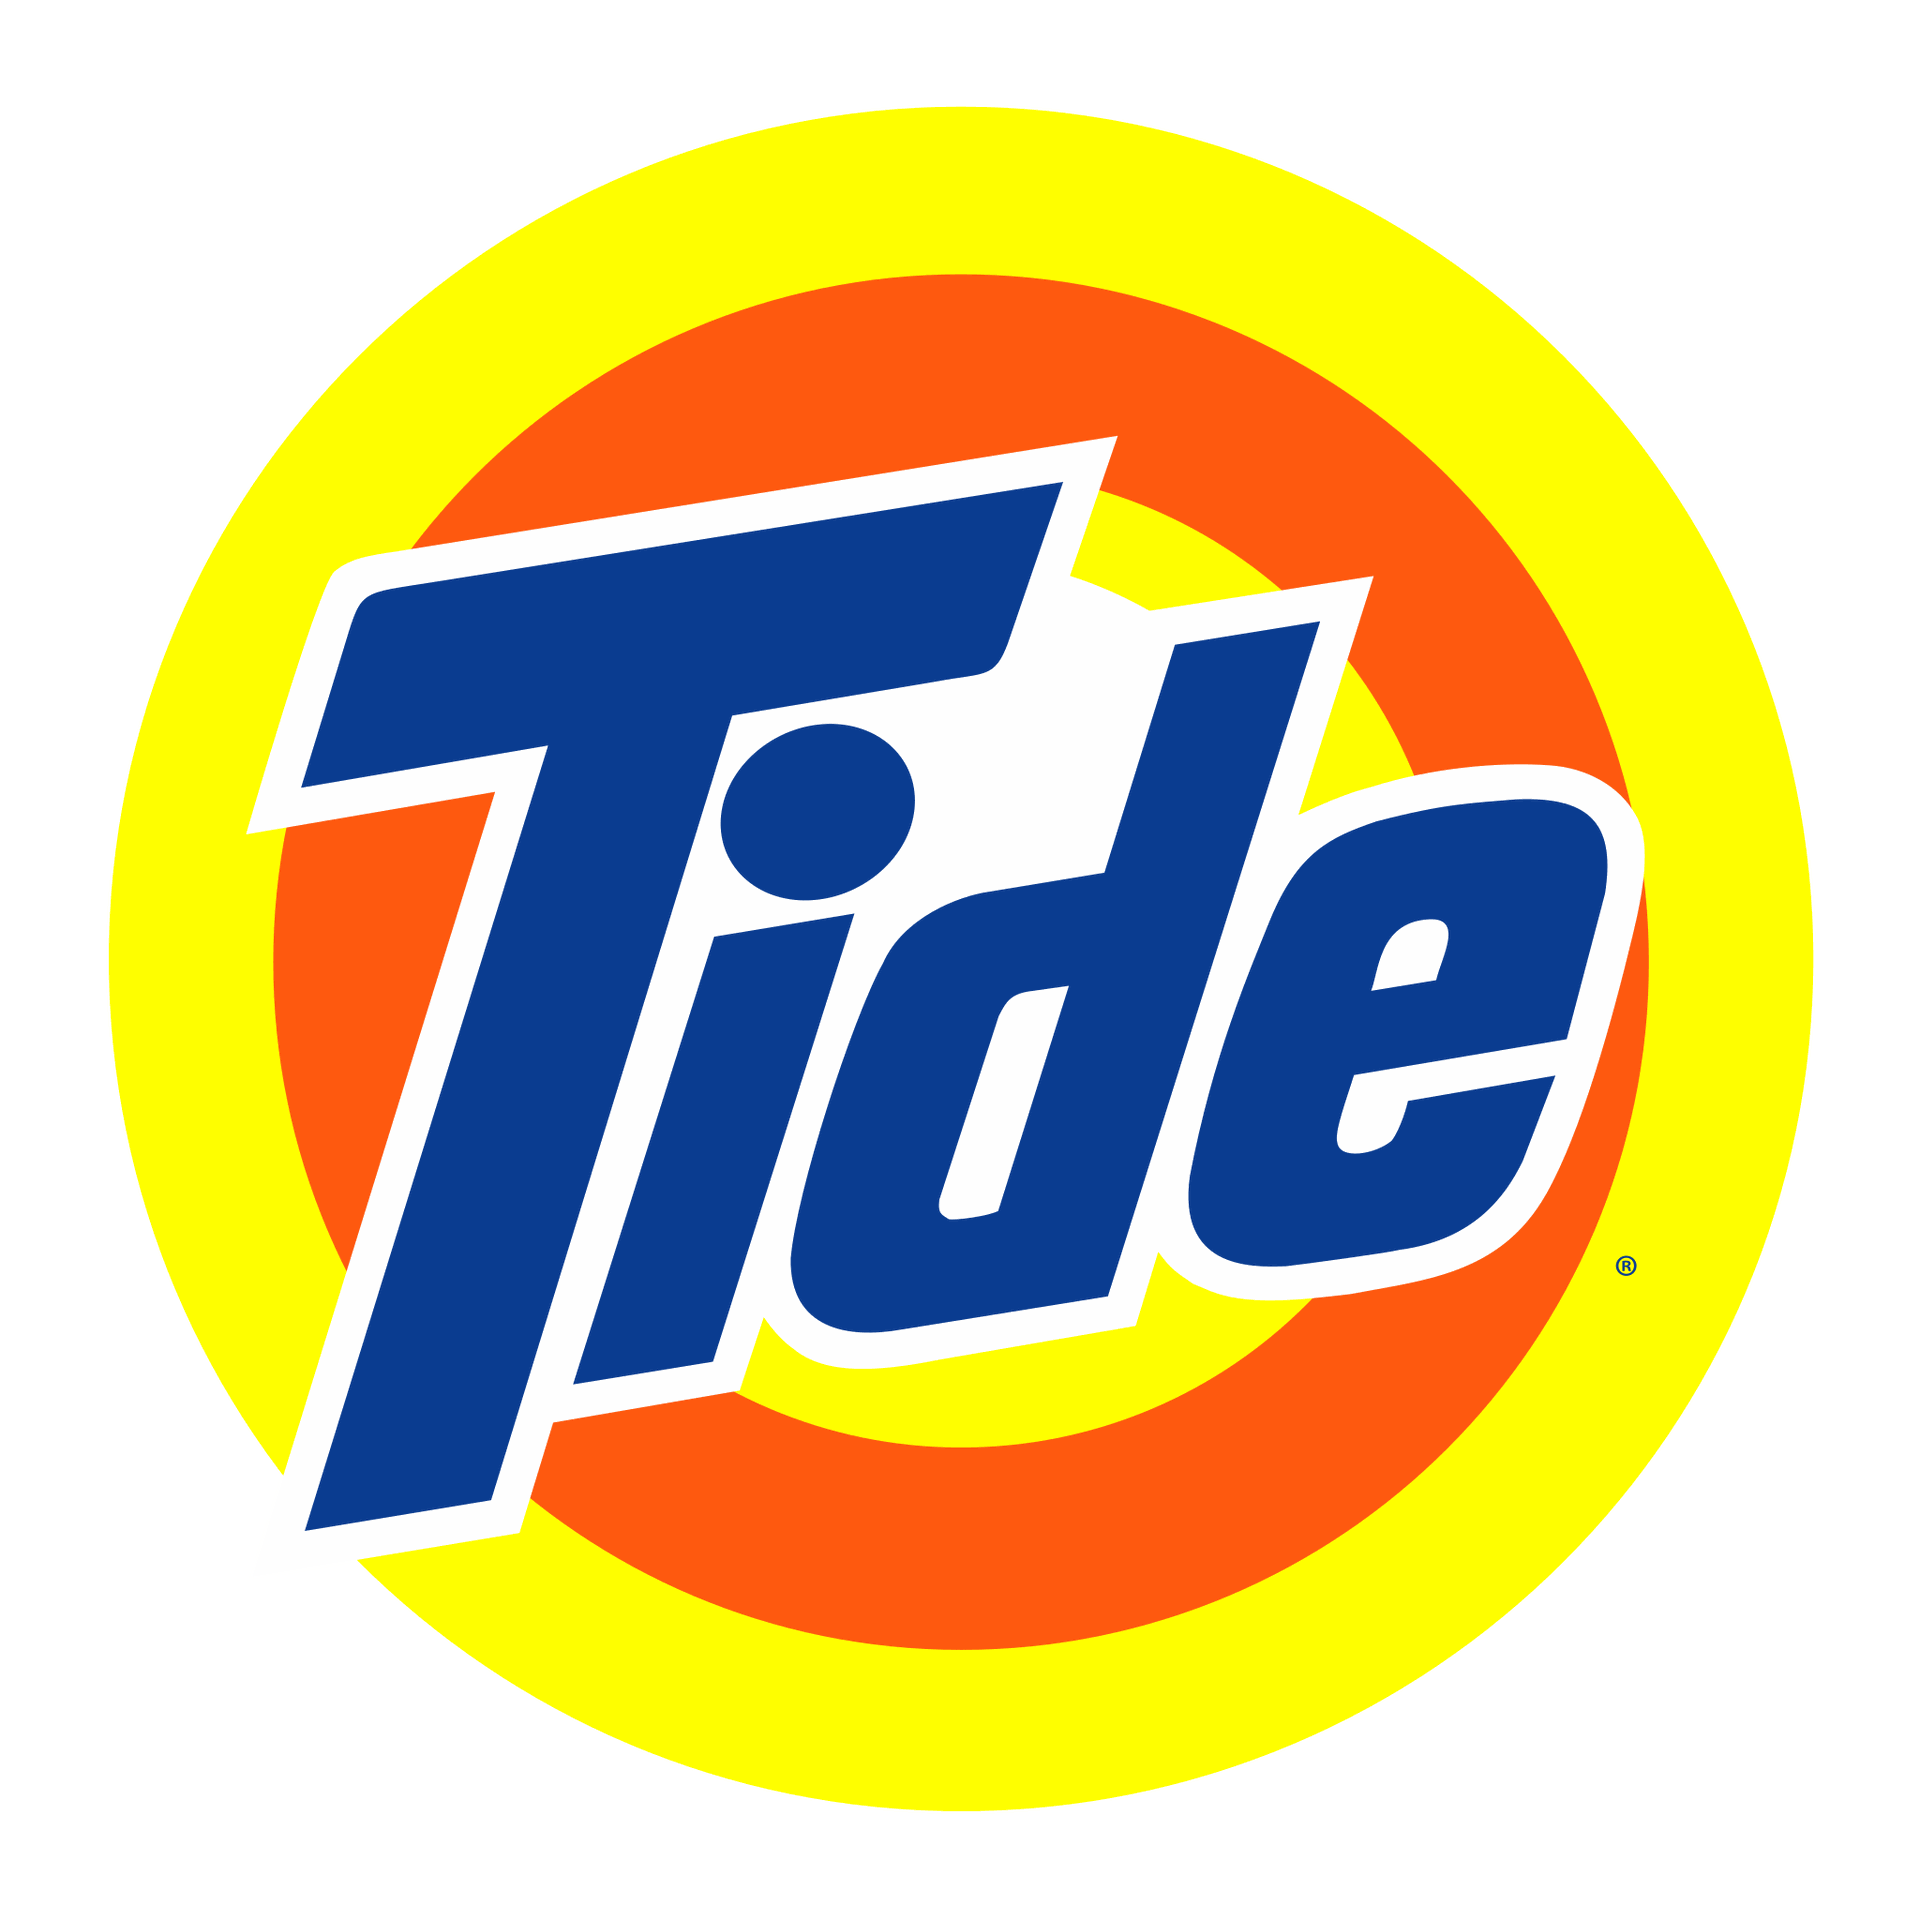 Brand: Tide